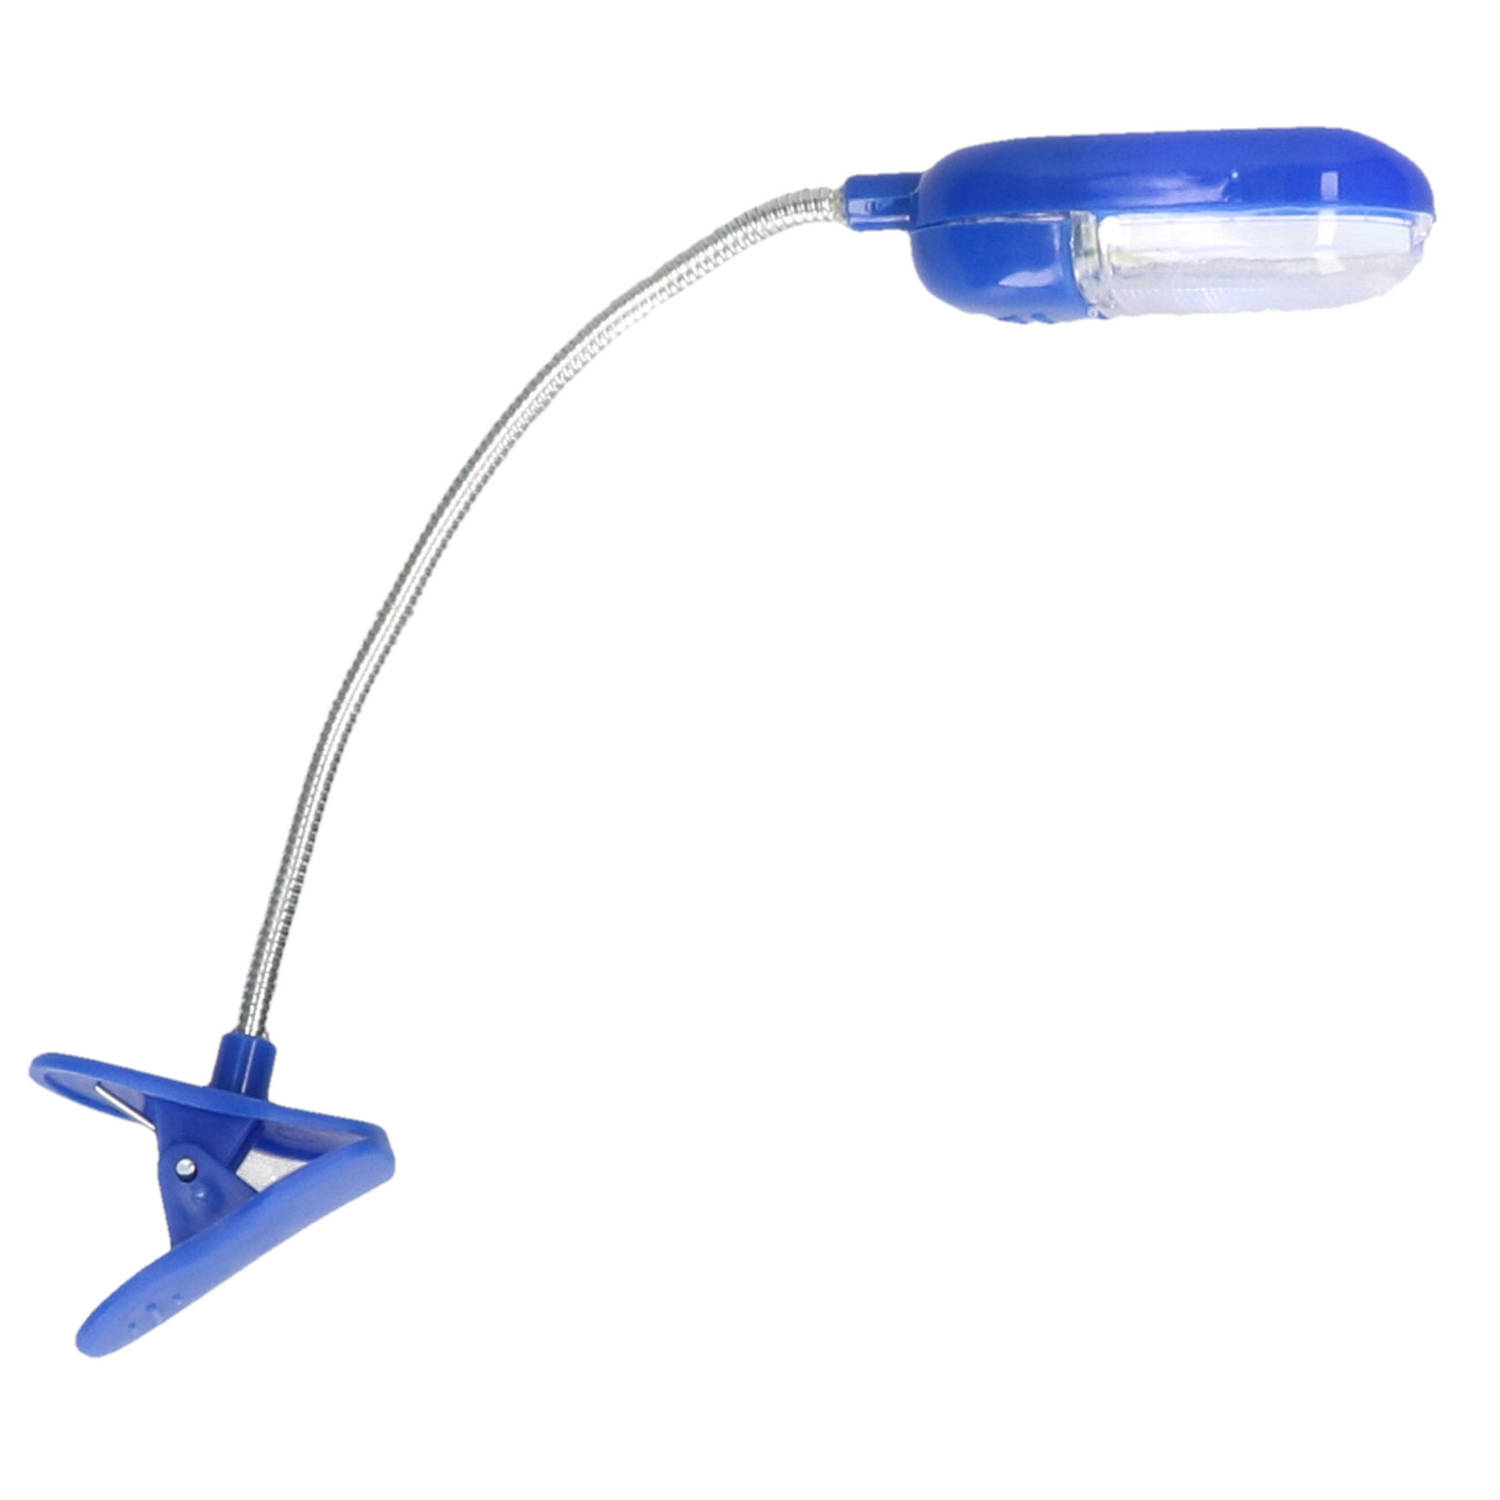 LED Leeslamp met klem blauw 25 cm incl. batterijen Klemlampen